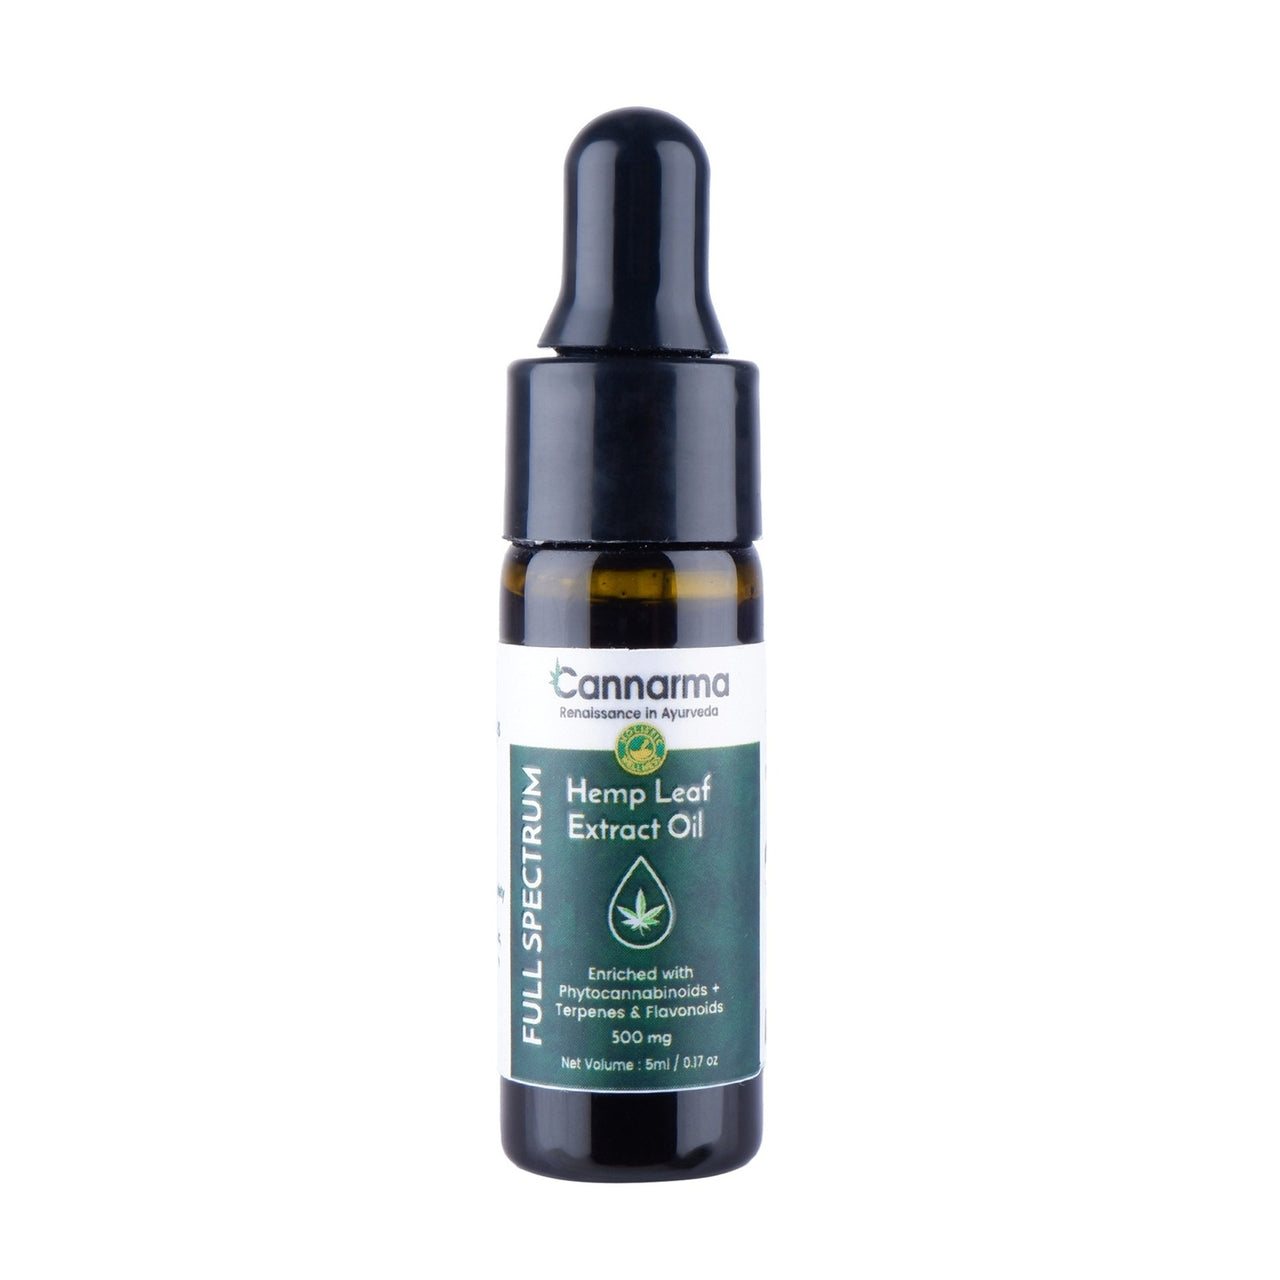 Cannarma Ultra premium Full Spectrum Cannabis Leaf Extract Oil 10ml 5% (500mg)